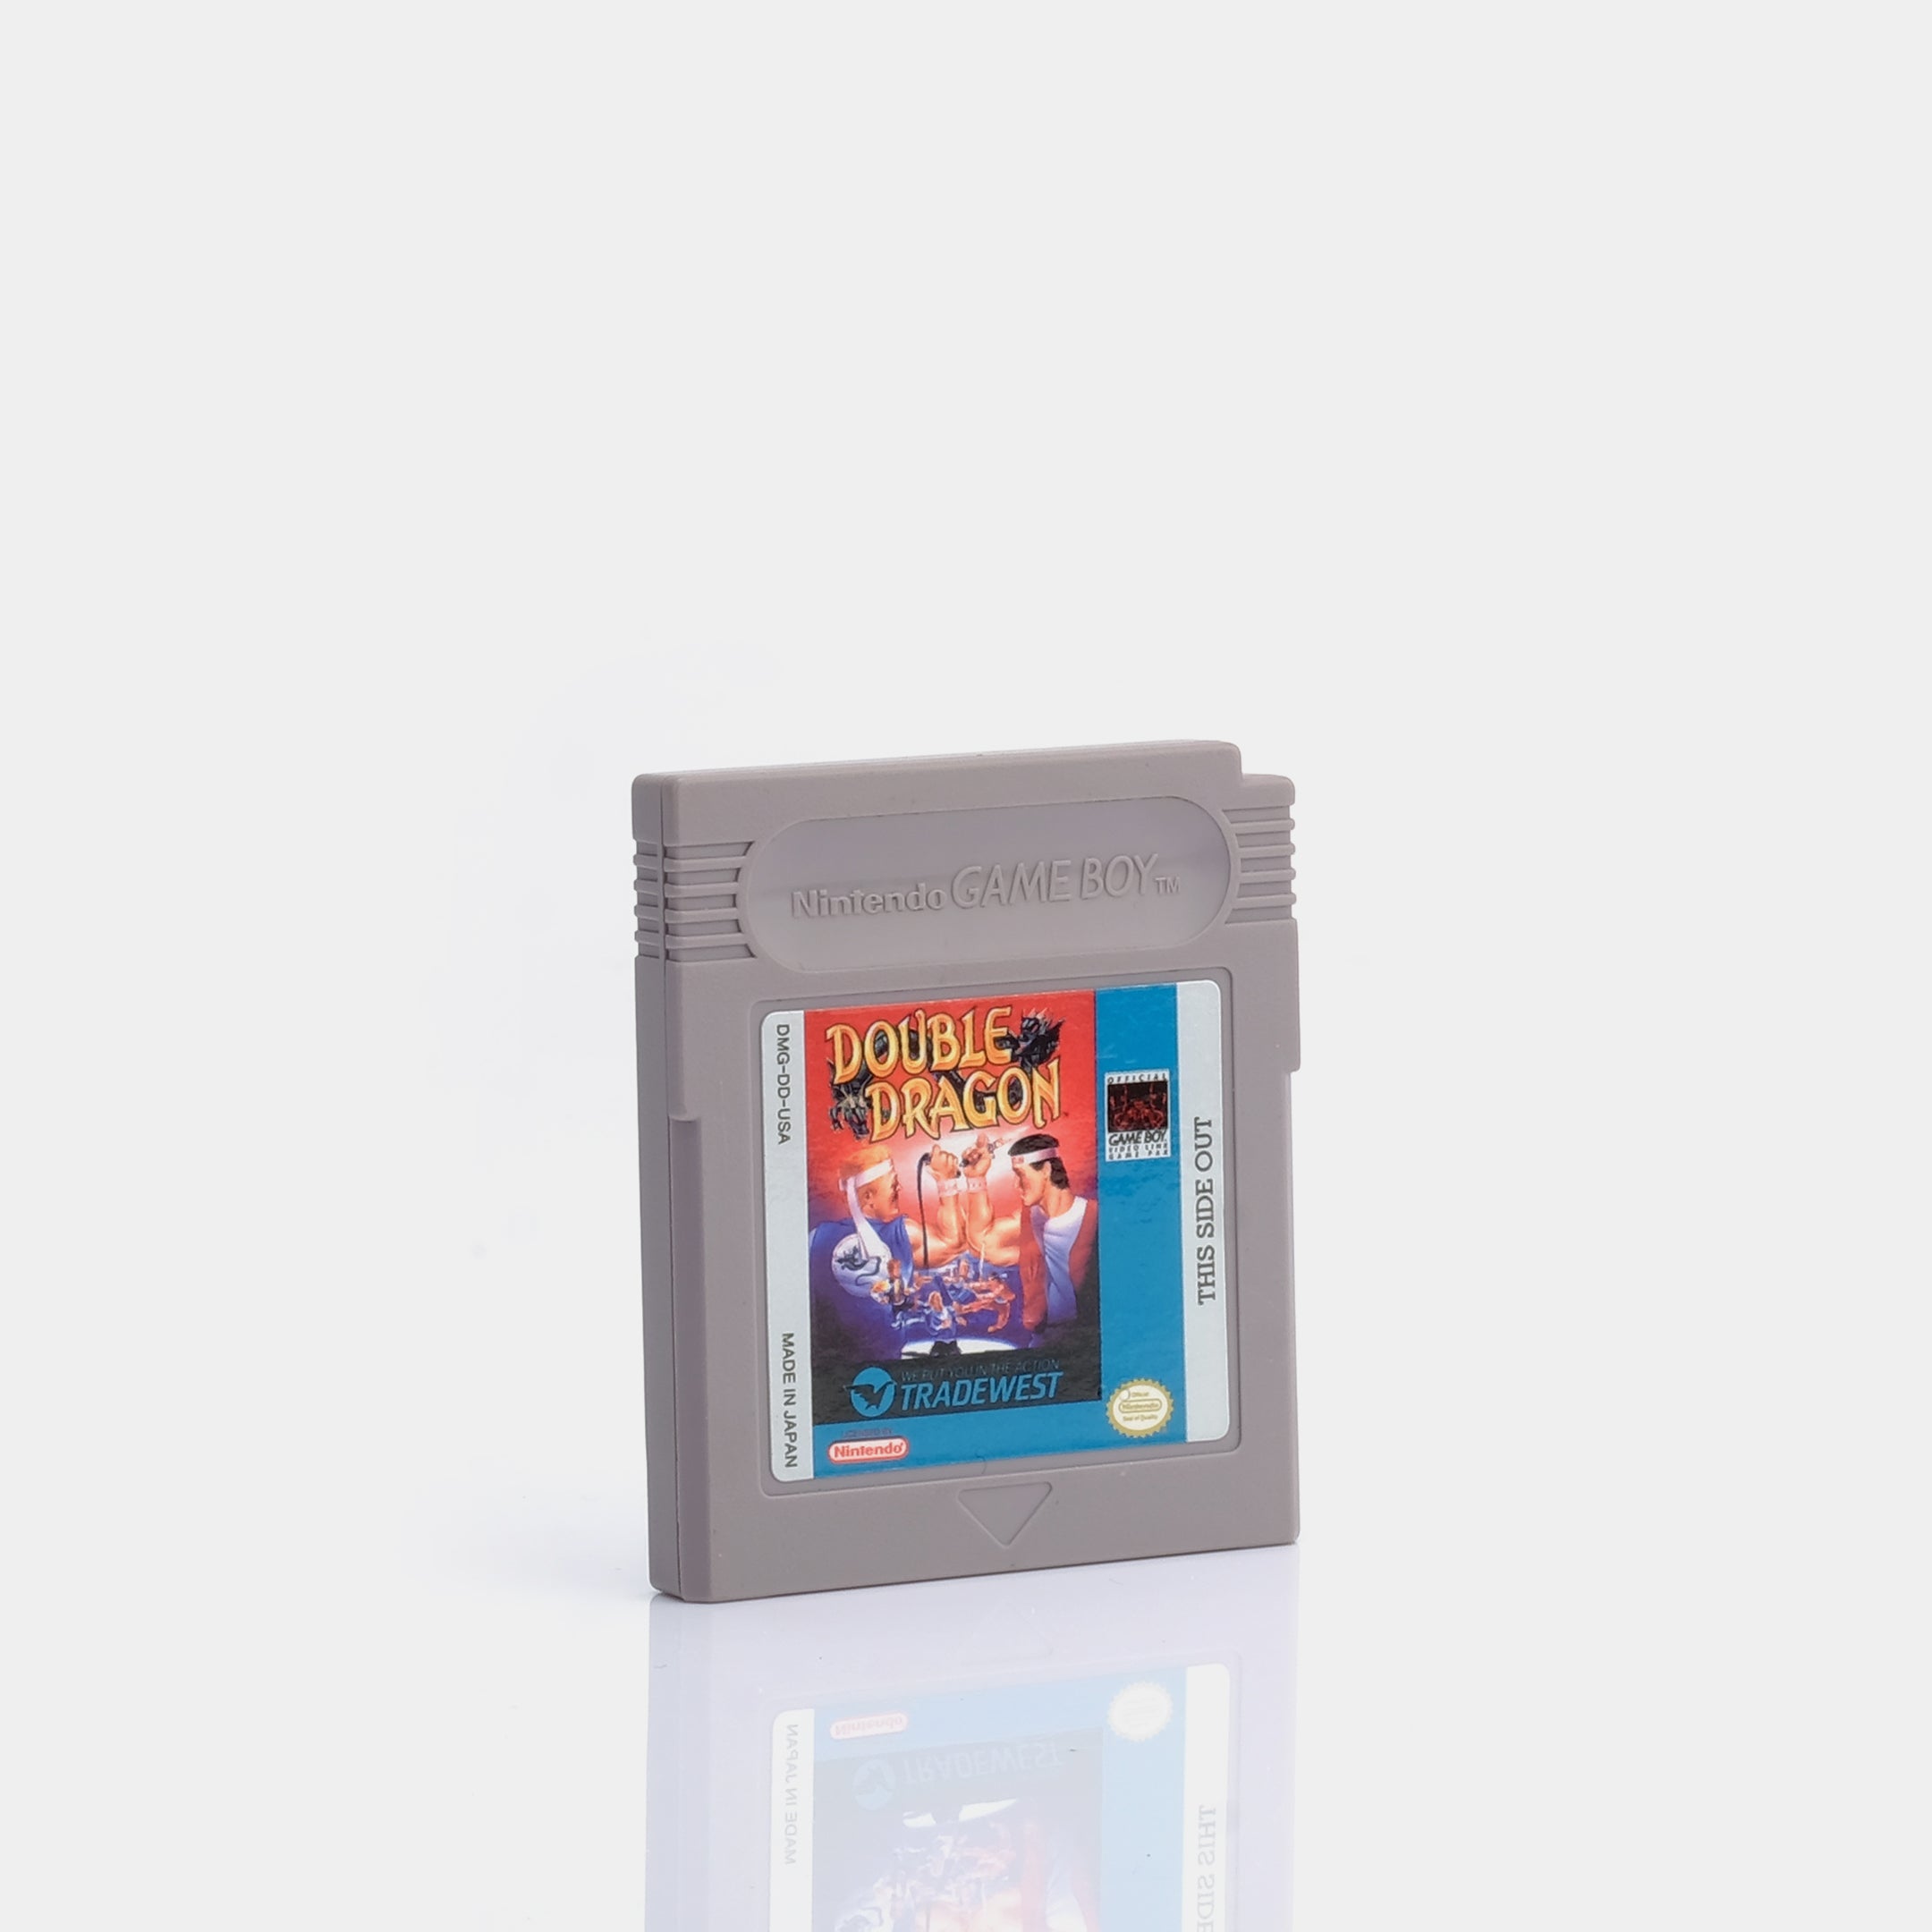 Double Dragon Game Boy Game